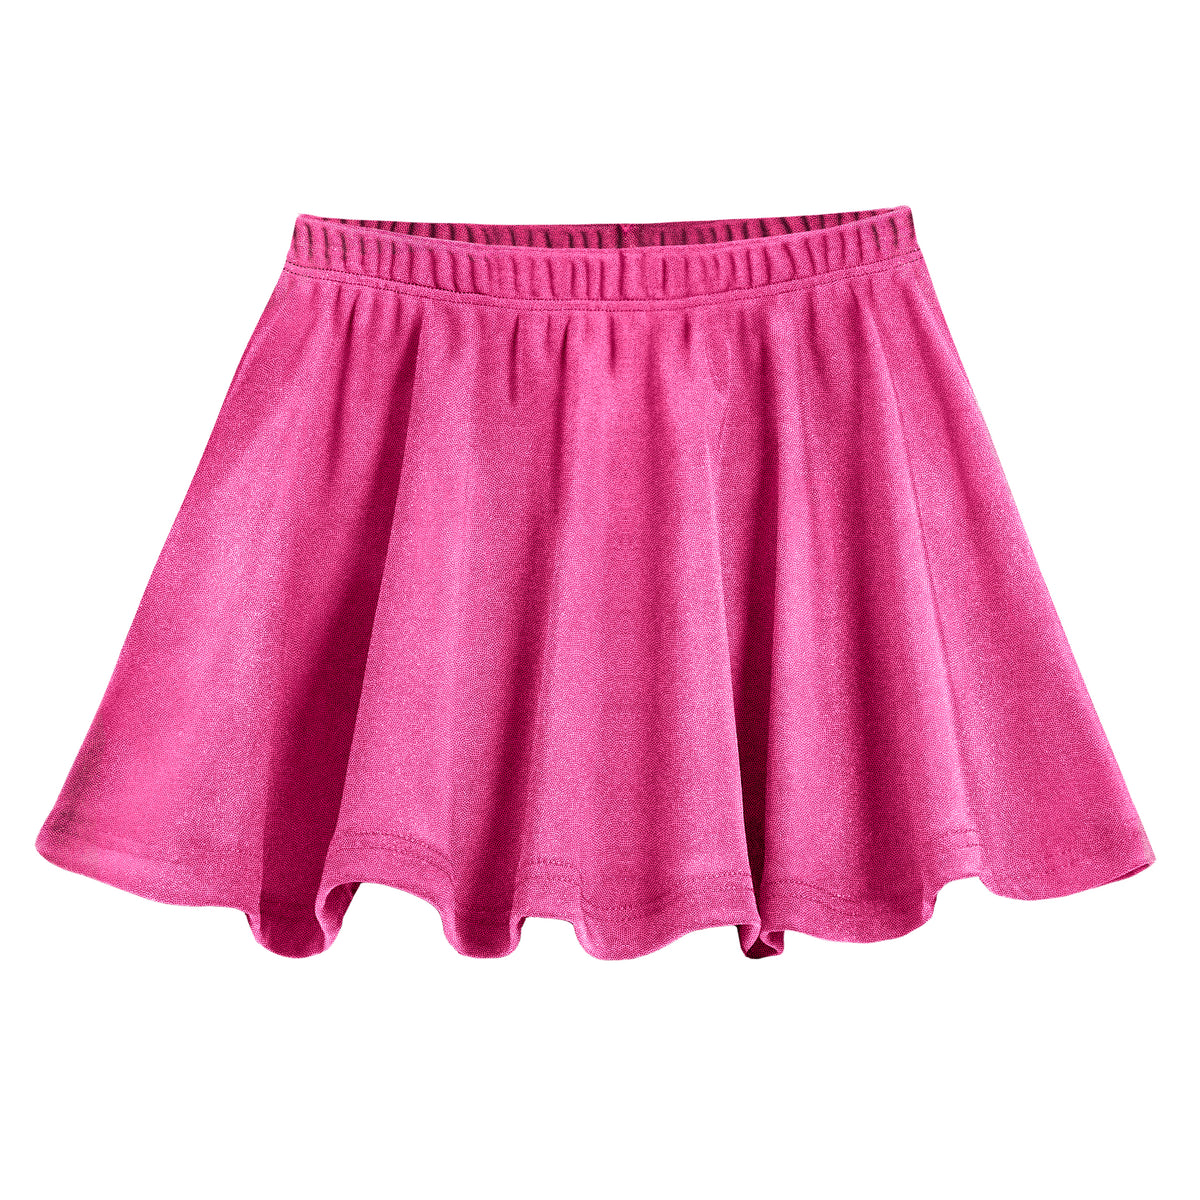 Girls Novelty Circle Skirt | Fuchsia Sparkly Shimmer